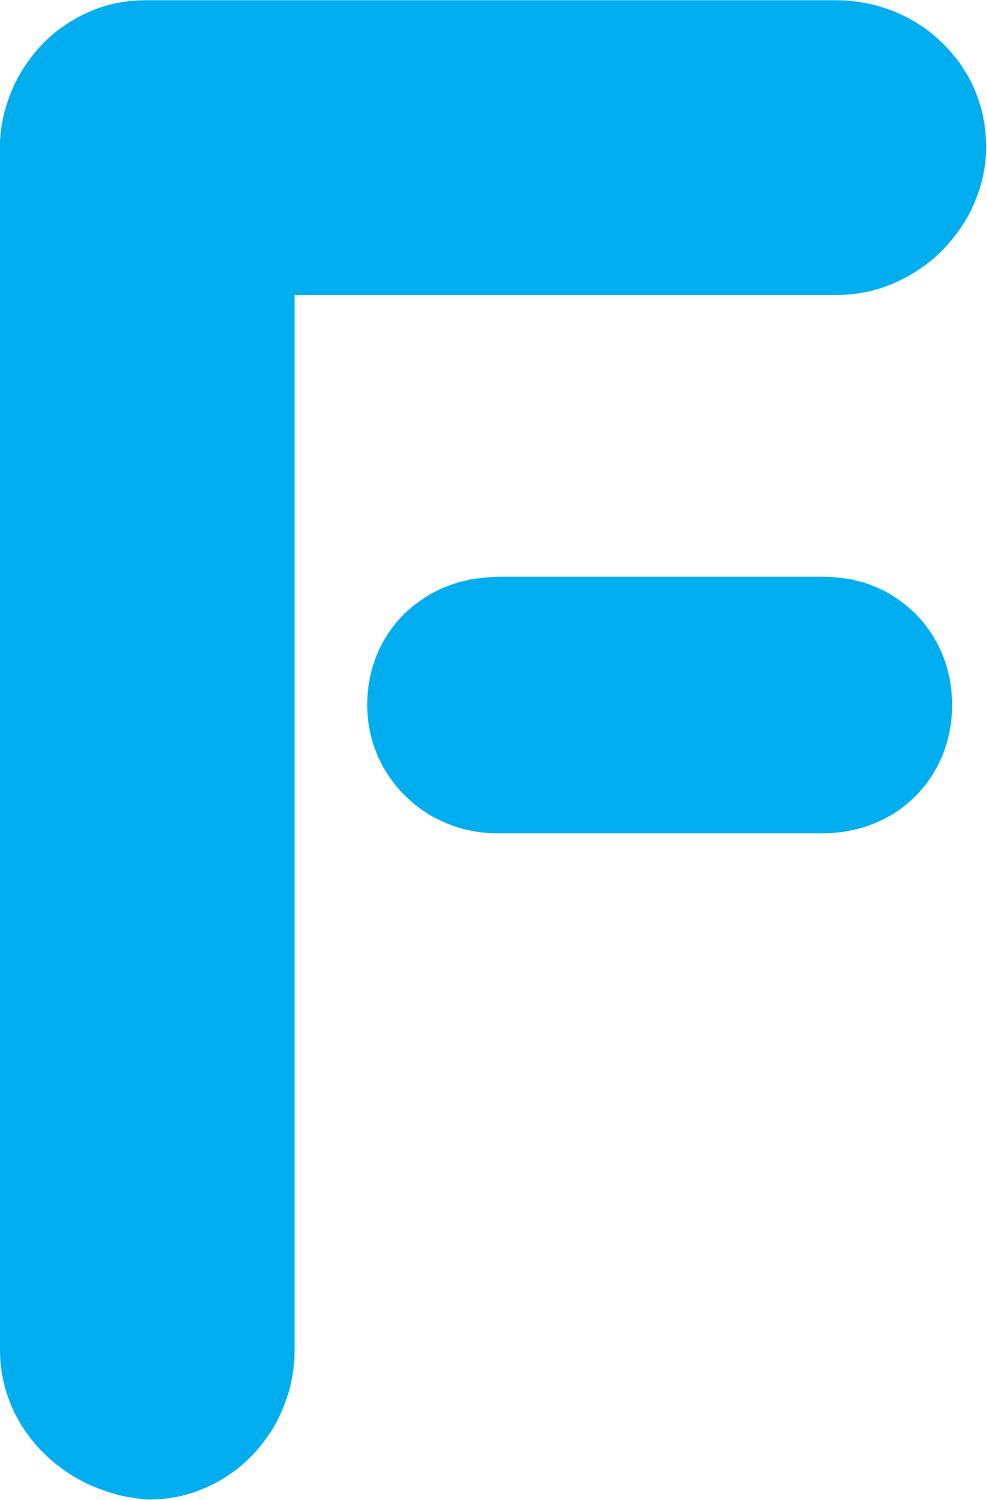 FactSet logo (PNG transparent)